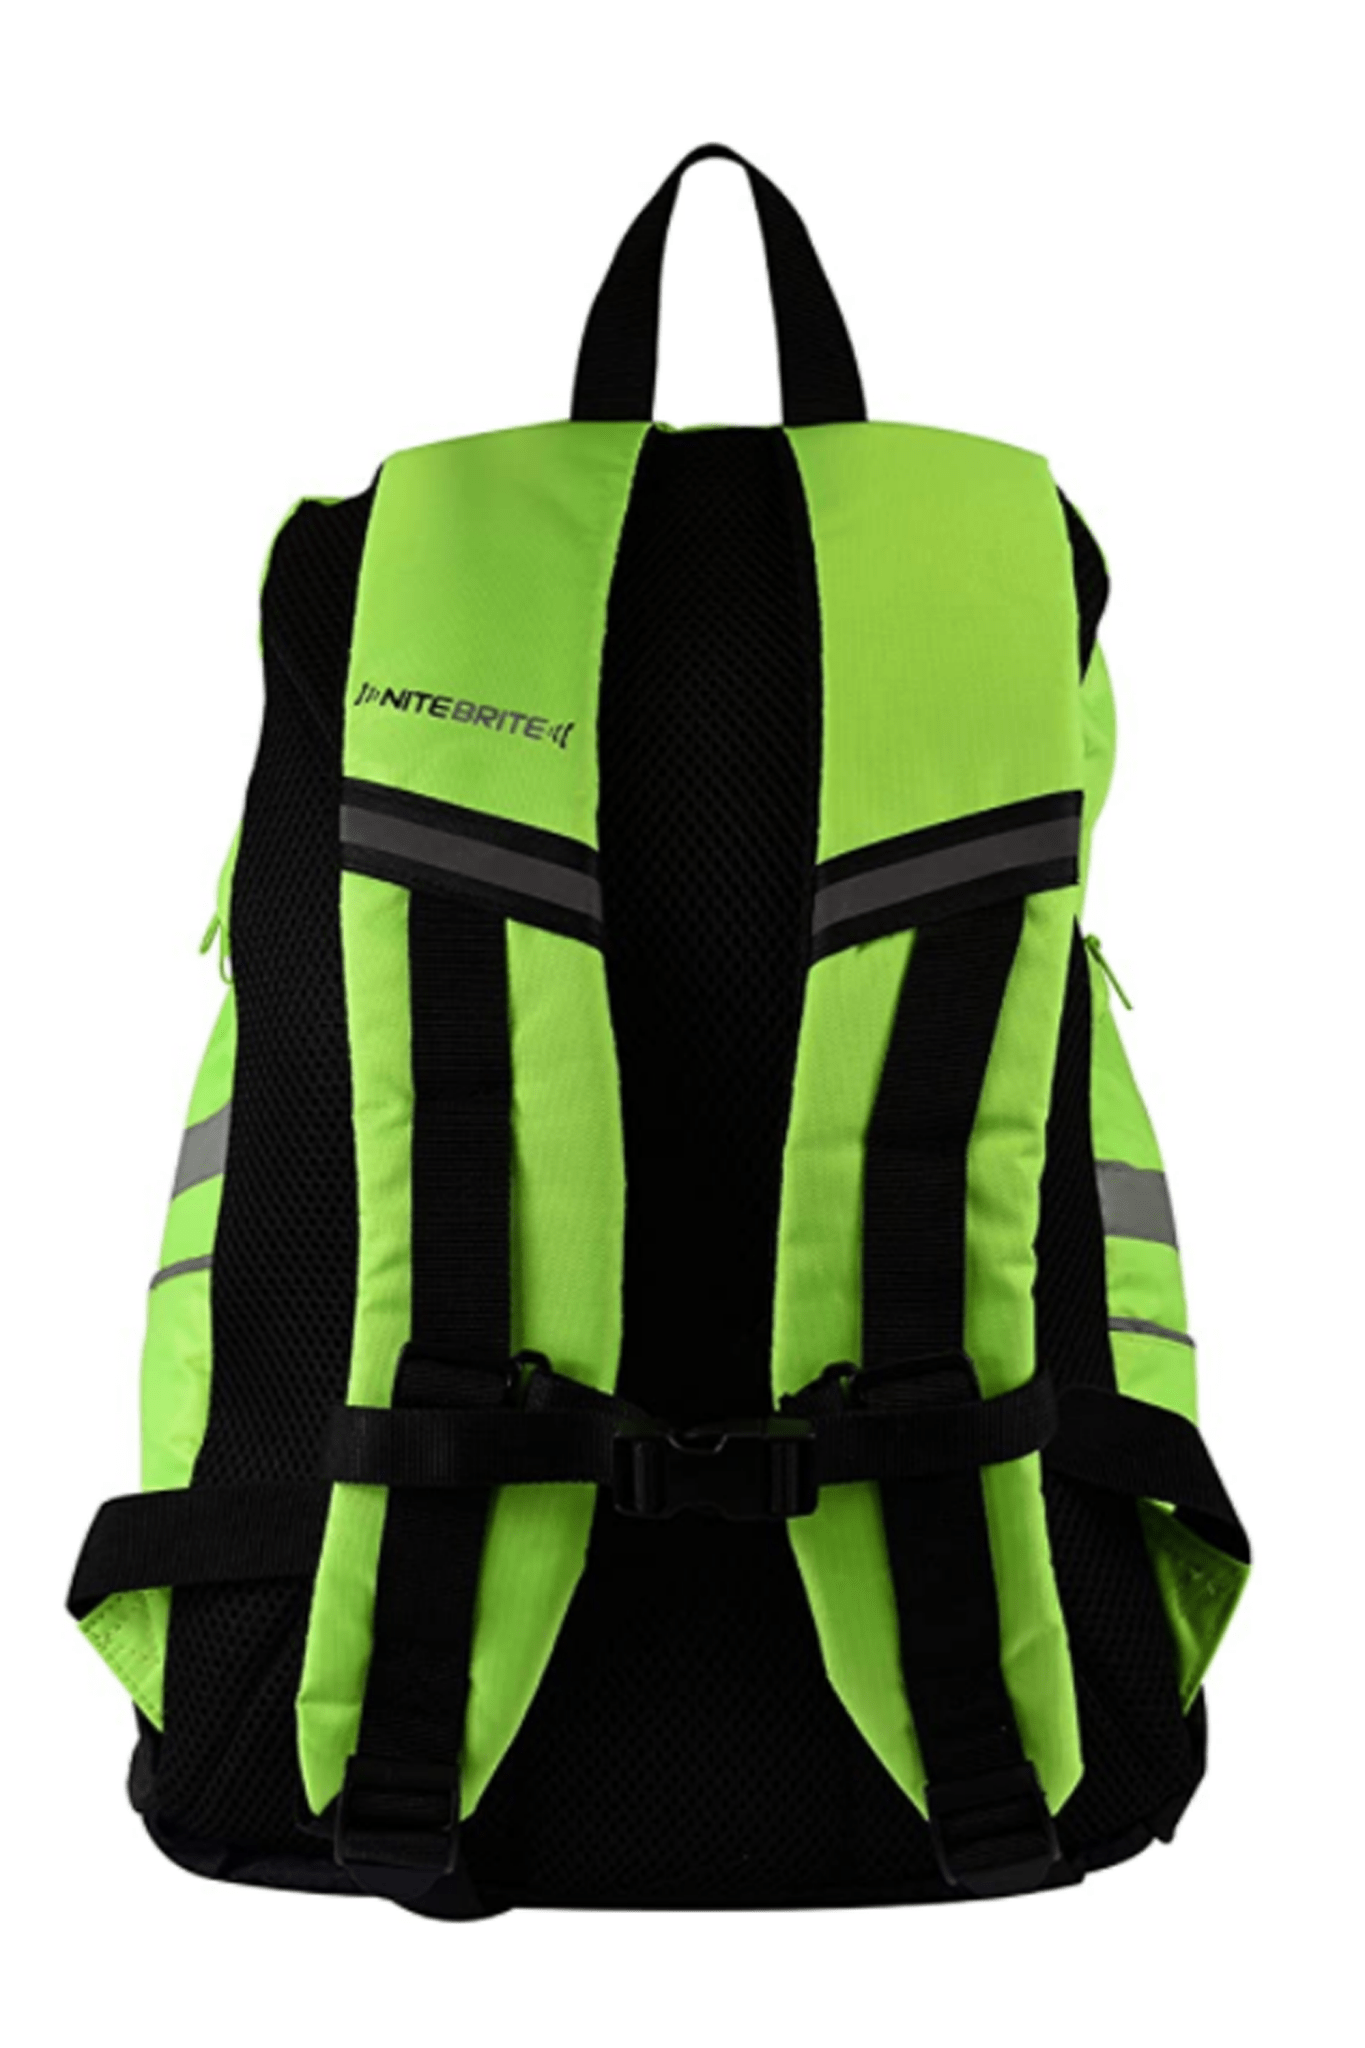 Nitebrite Backpack - Optimum